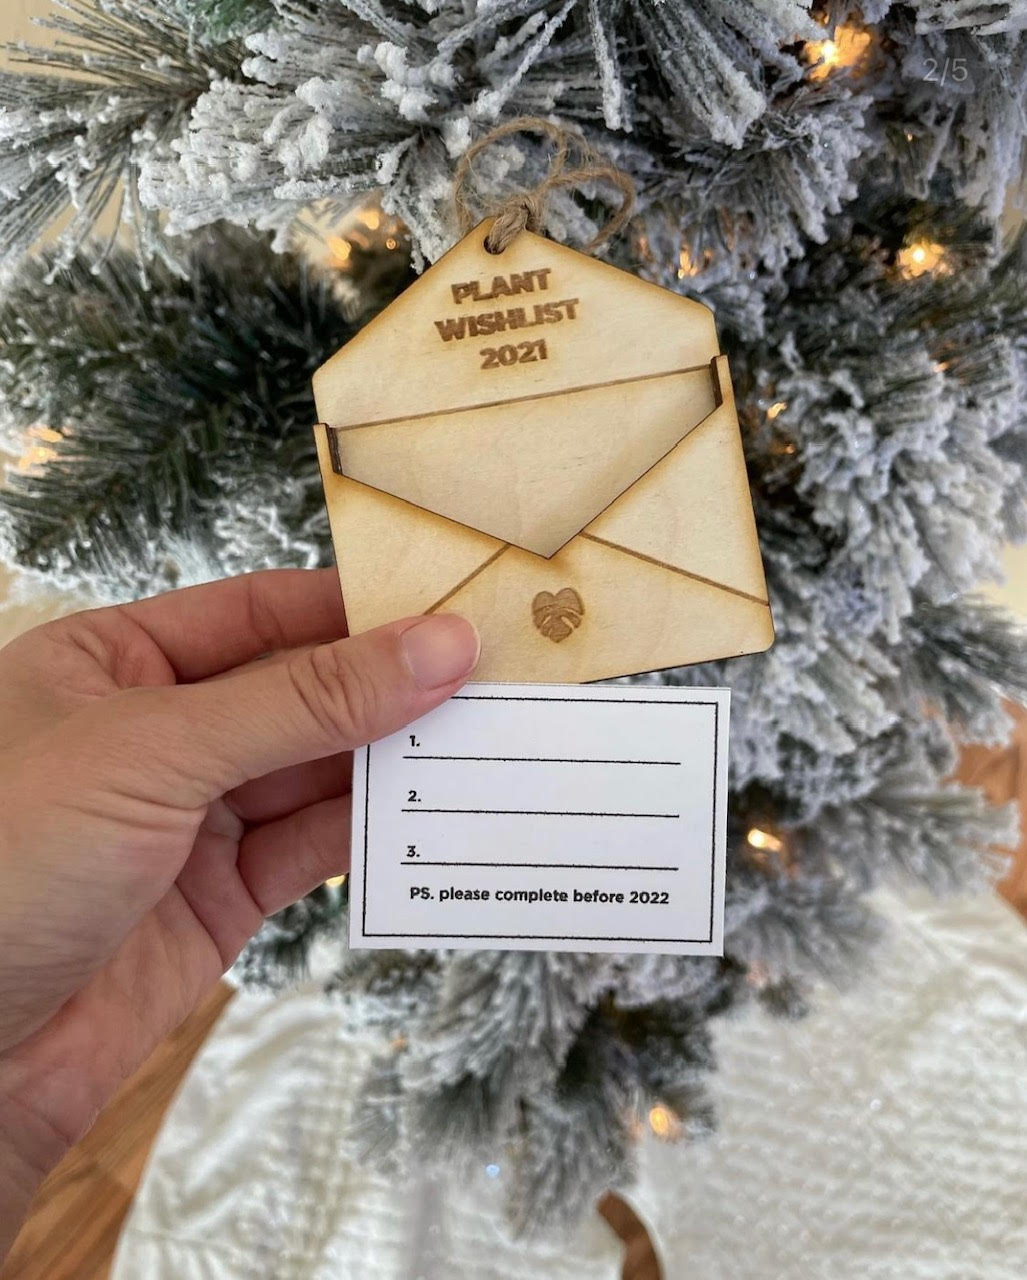 Houseplant Wishlist Envelope Ornament